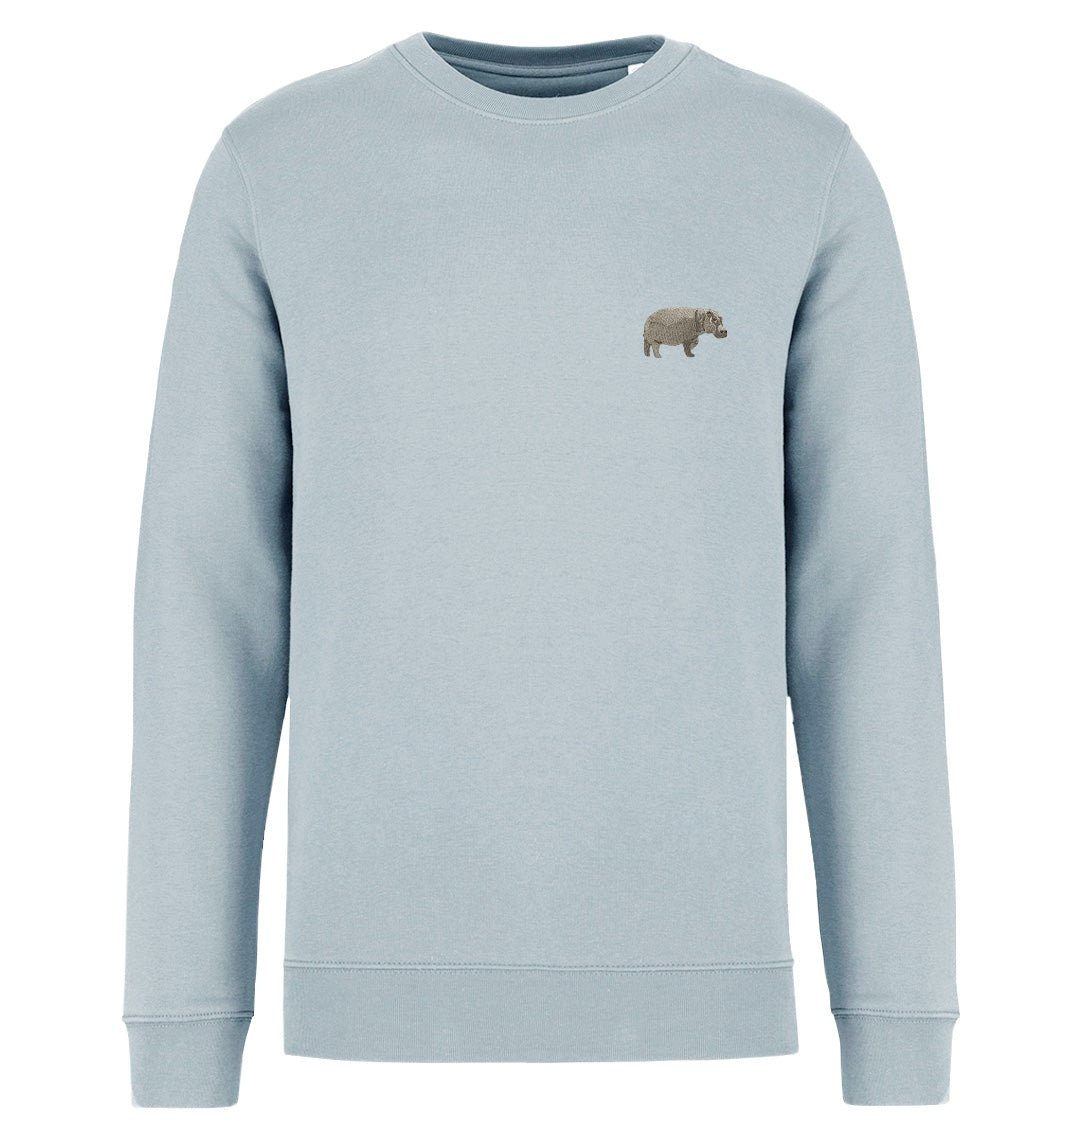 Hippo Womens Sweatshirt - Blue Panda